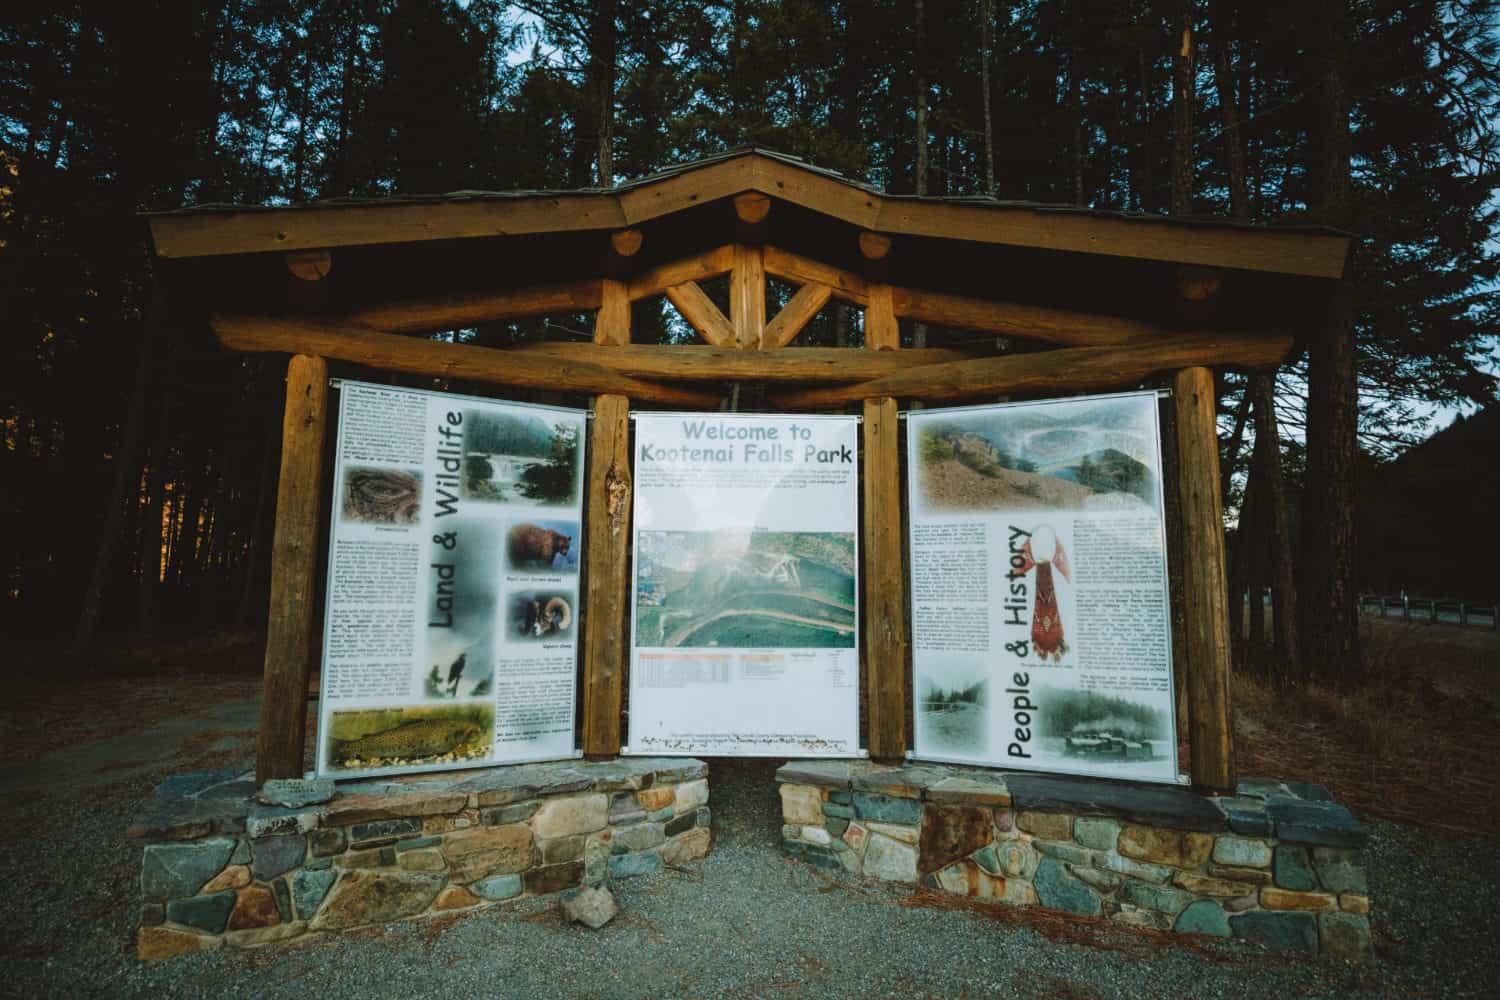 Kootenai Falls Park Information Kiosk